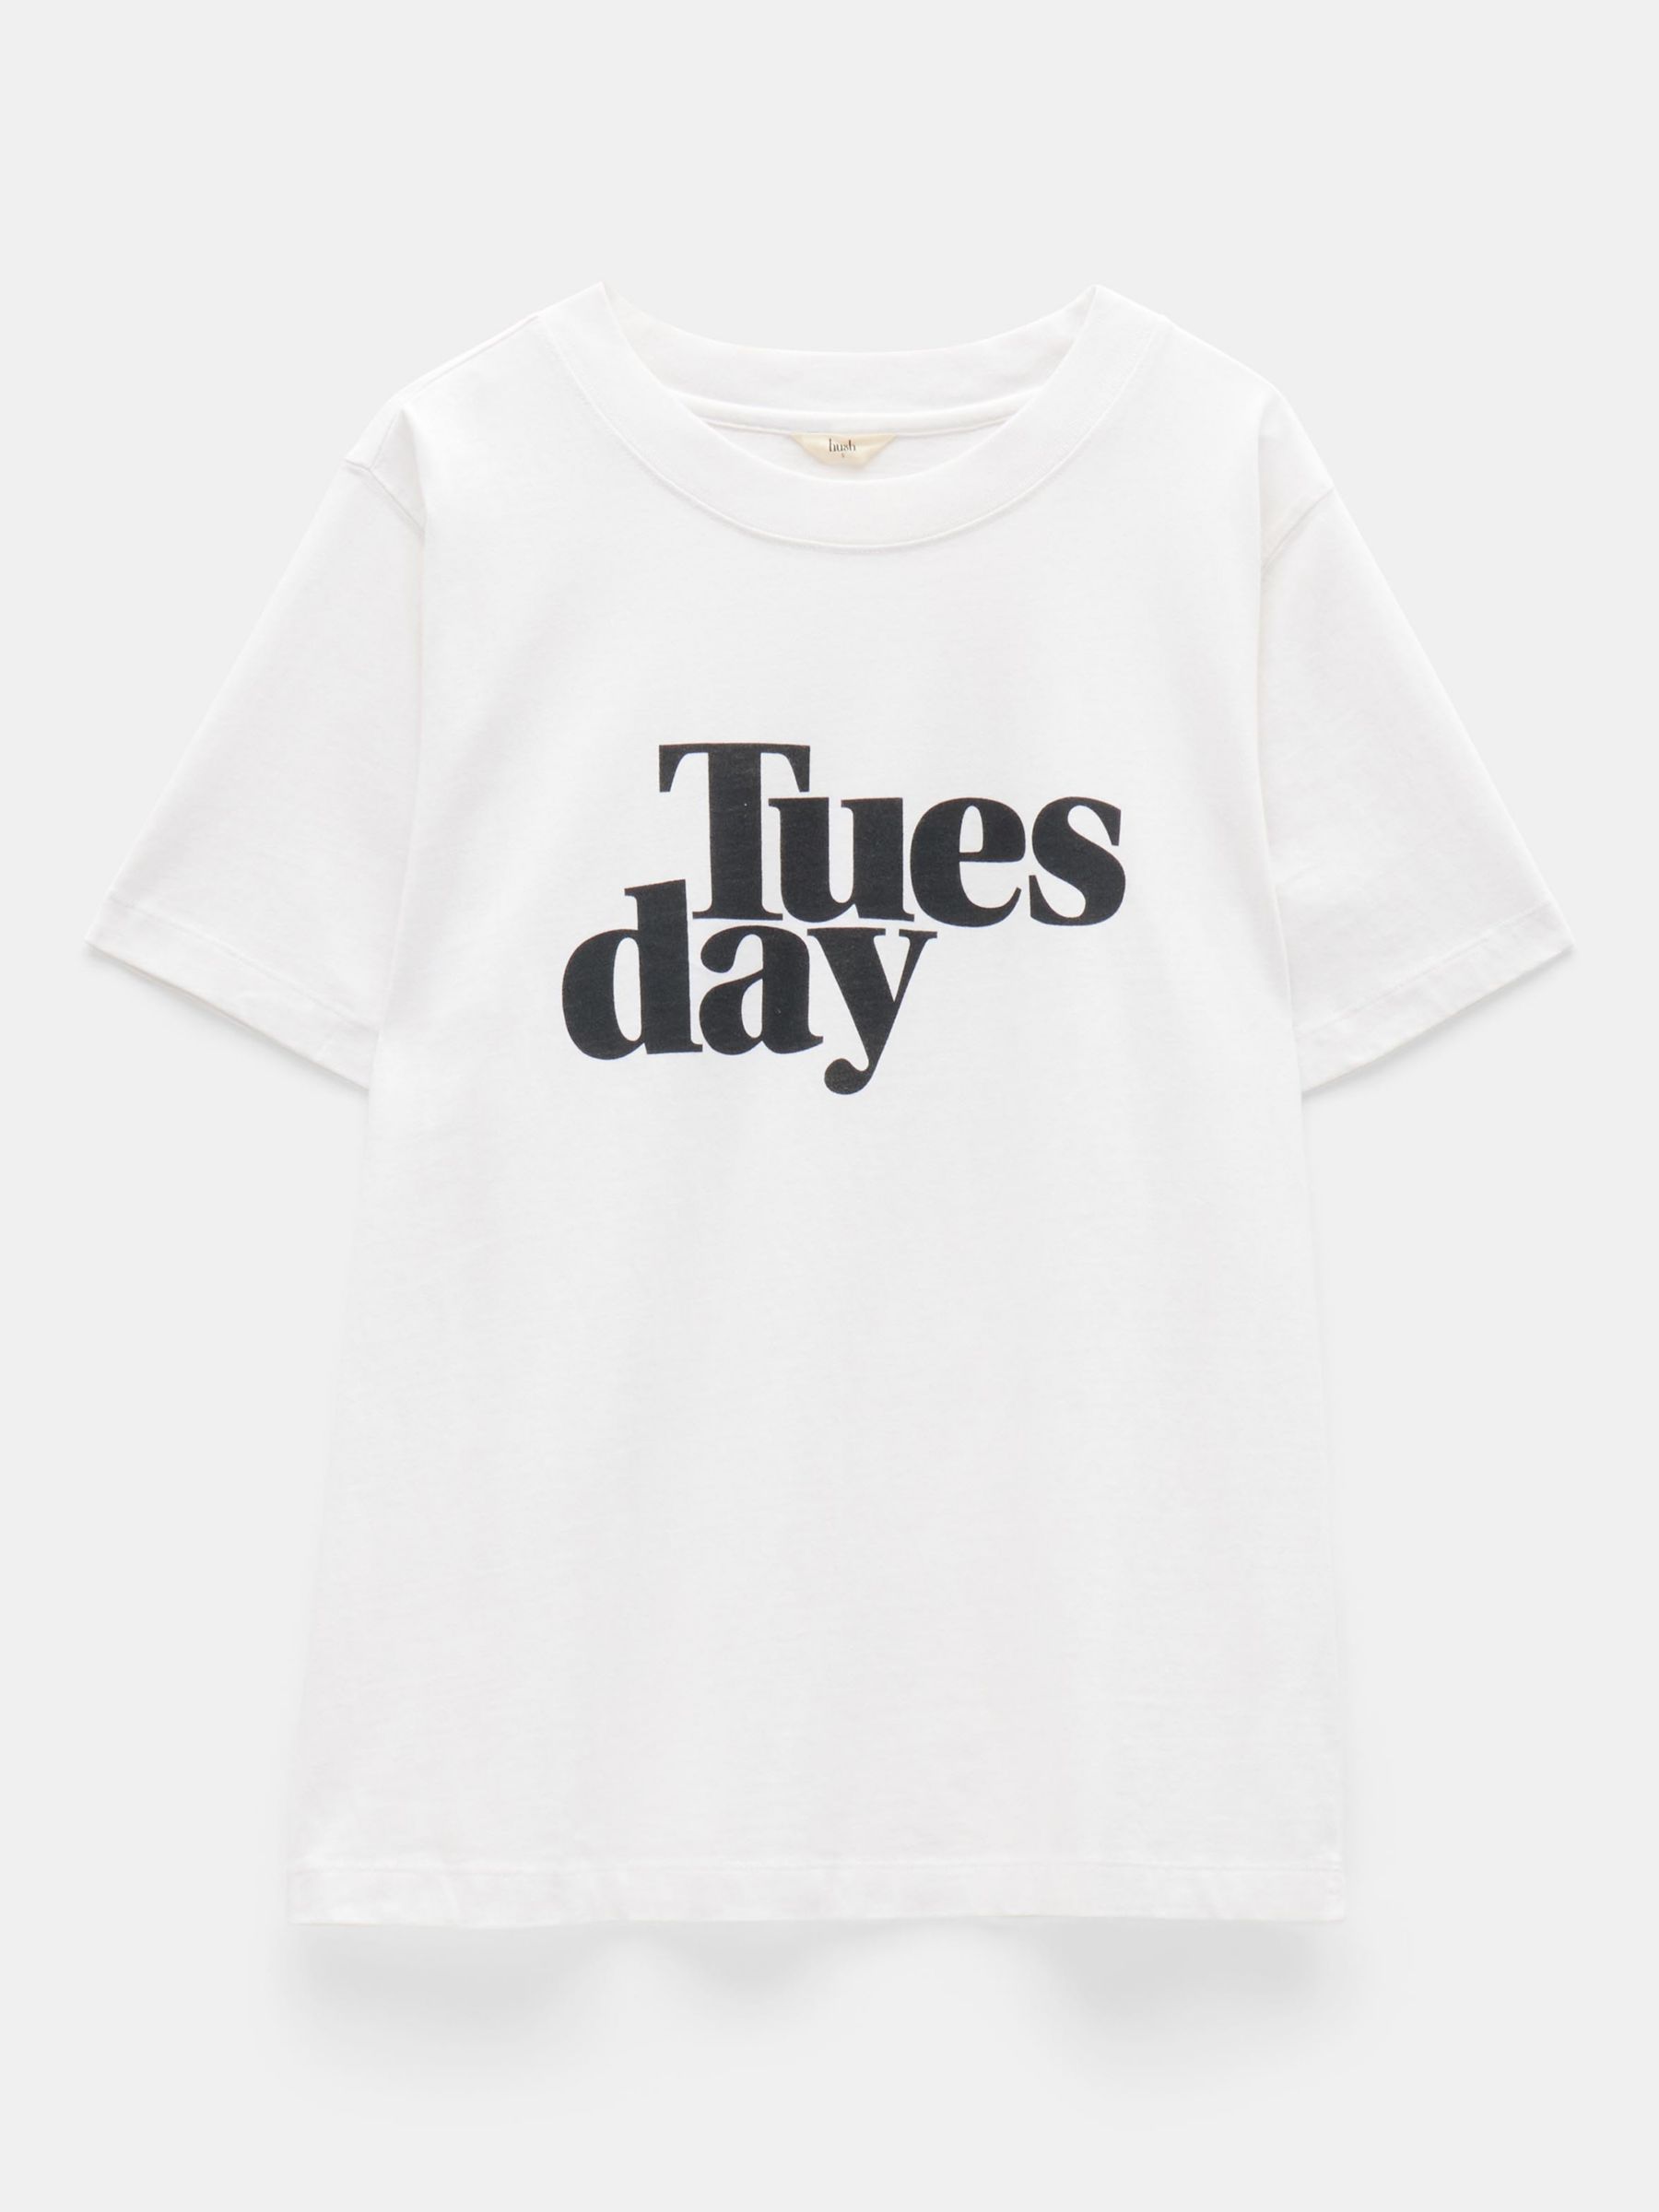 HUSH Tuesday Graphic Cotton T-shirt, White, S